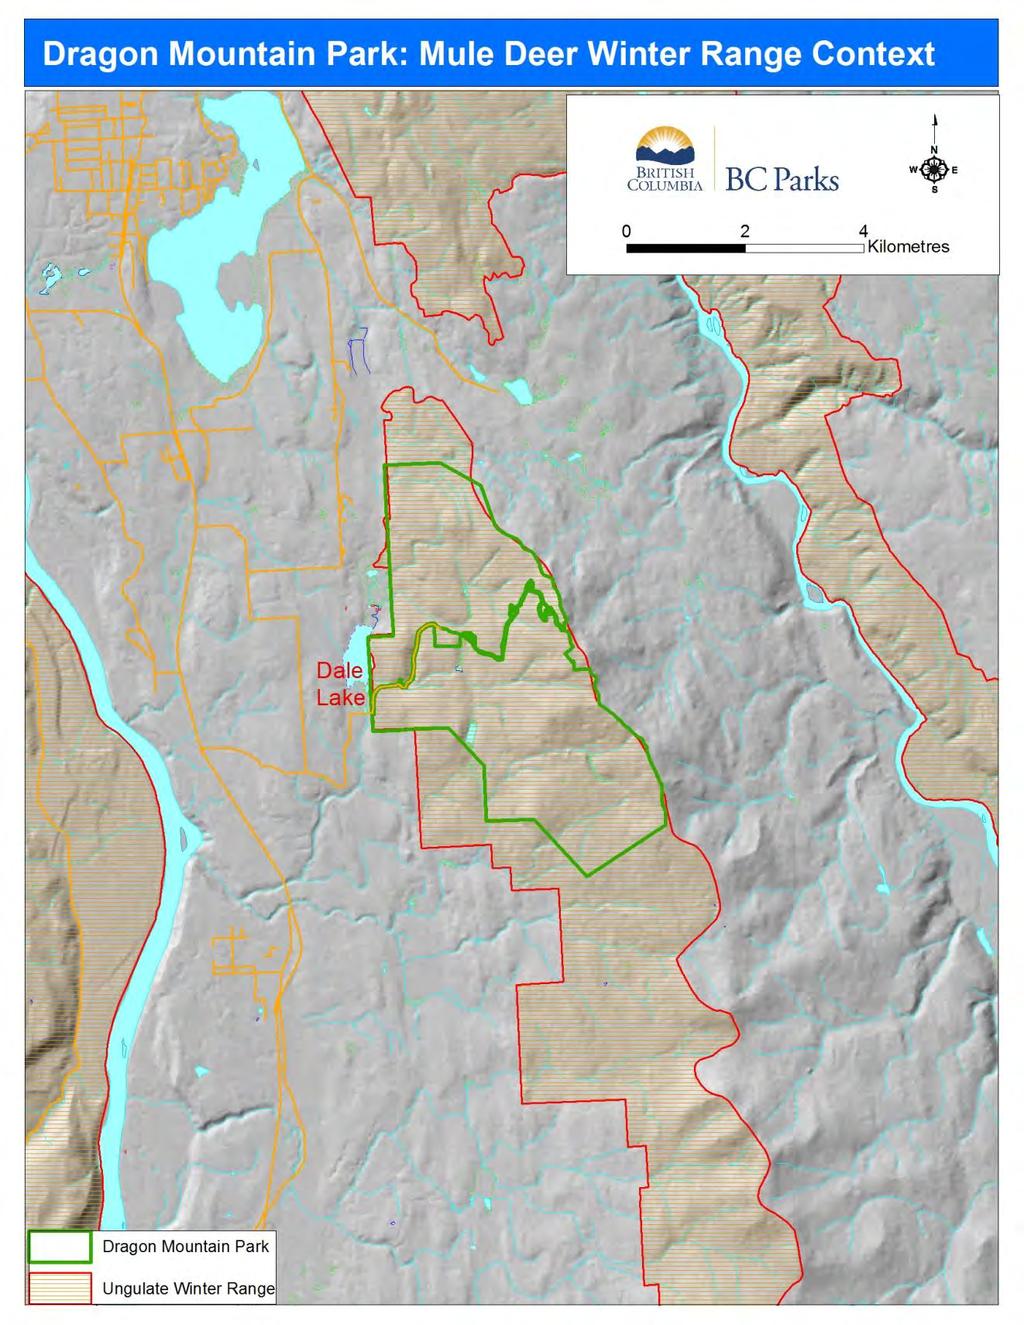 Figure 3: Map of Mule Deer Winter Range Context for